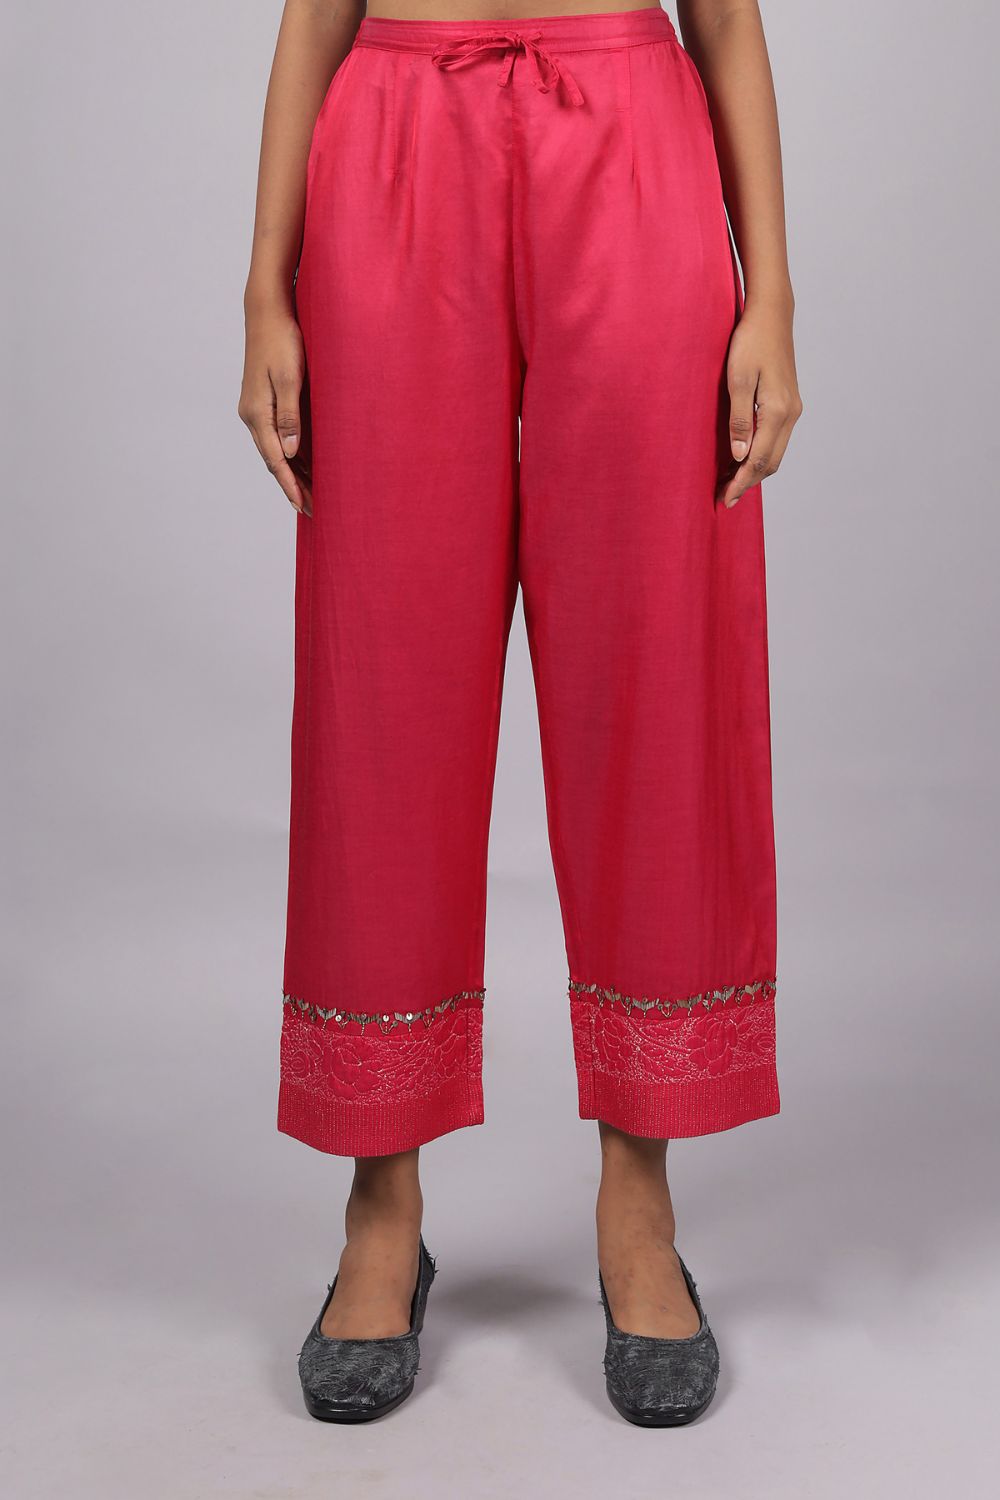 Deria - Red Fashion Shades of India